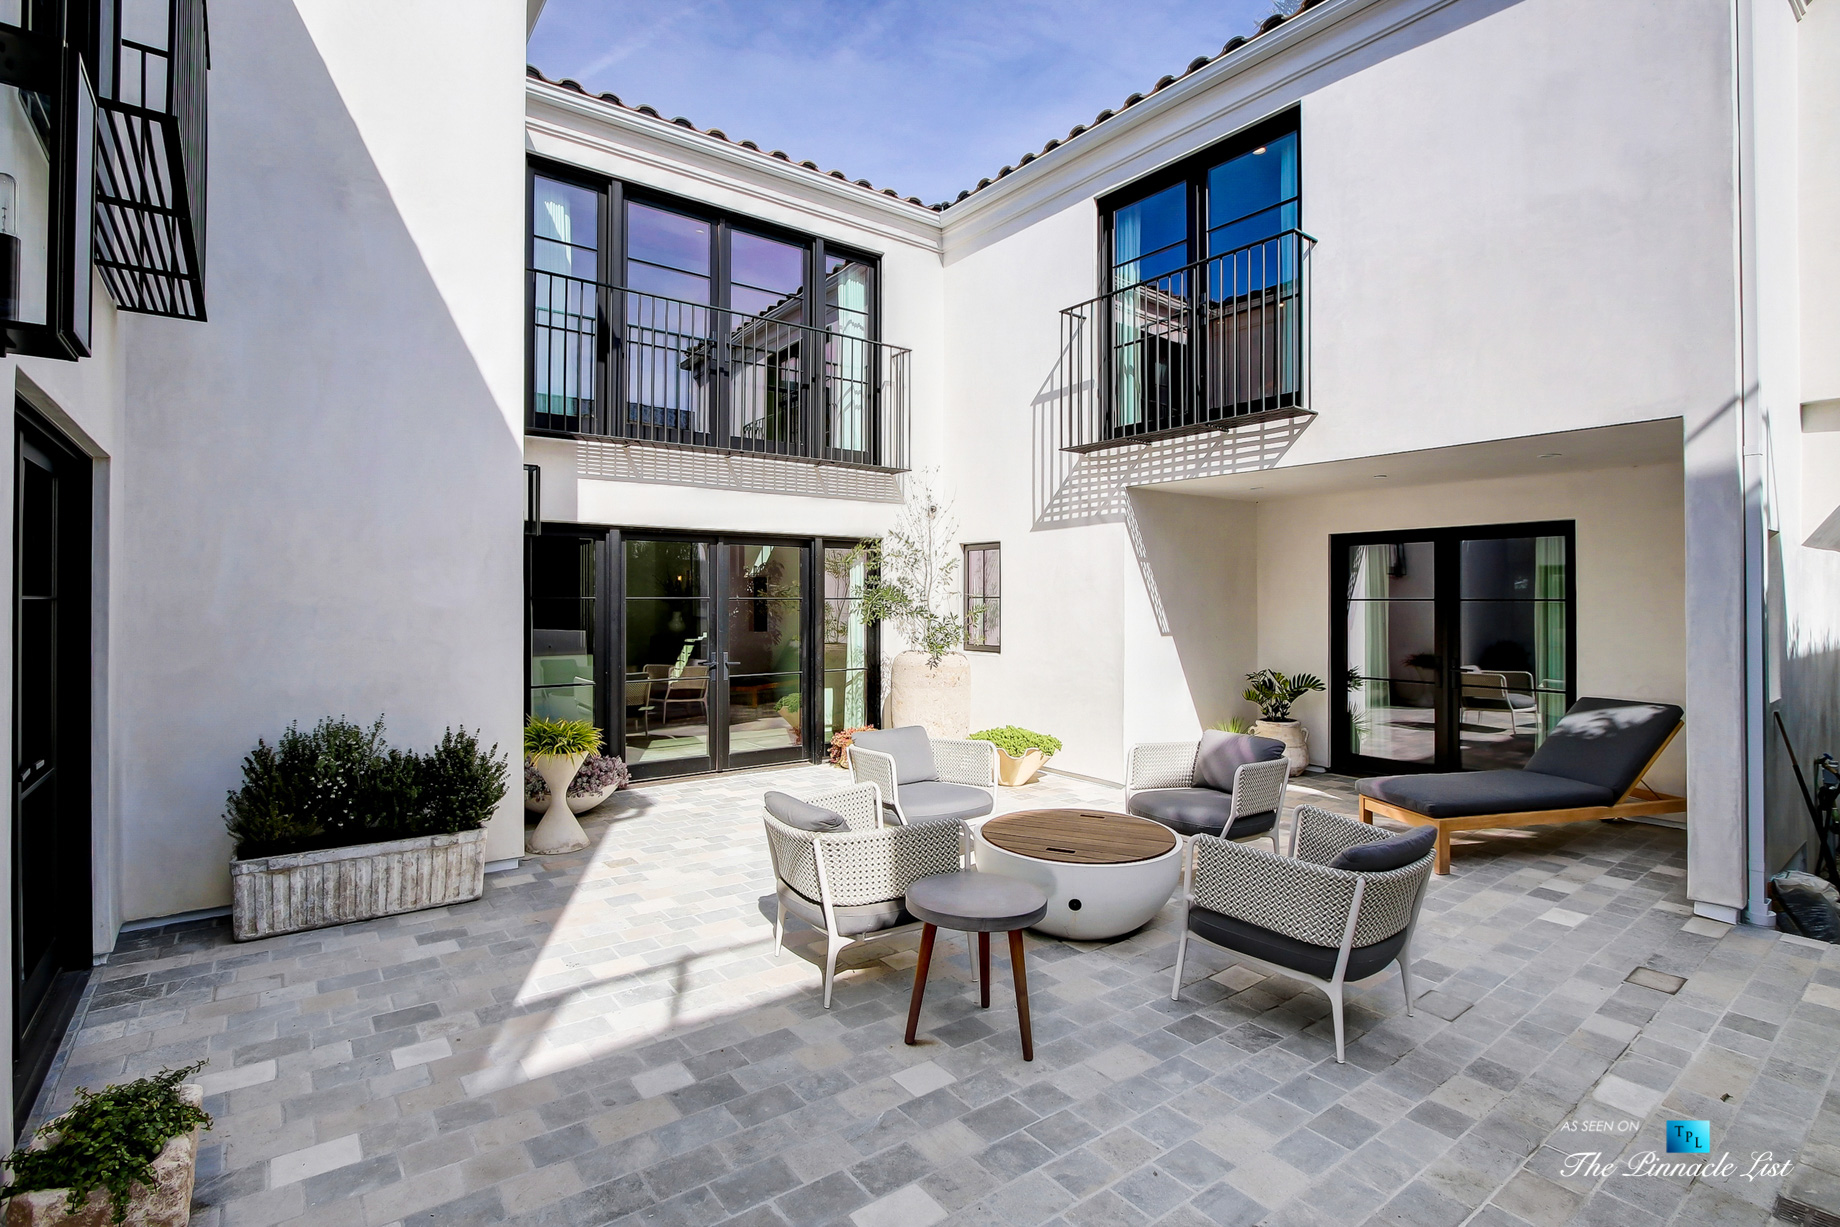 825 Highview Ave, Manhattan Beach, CA, USA – Private Exterior Courtyard – Luxury Real Estate – Modern Spanish Home